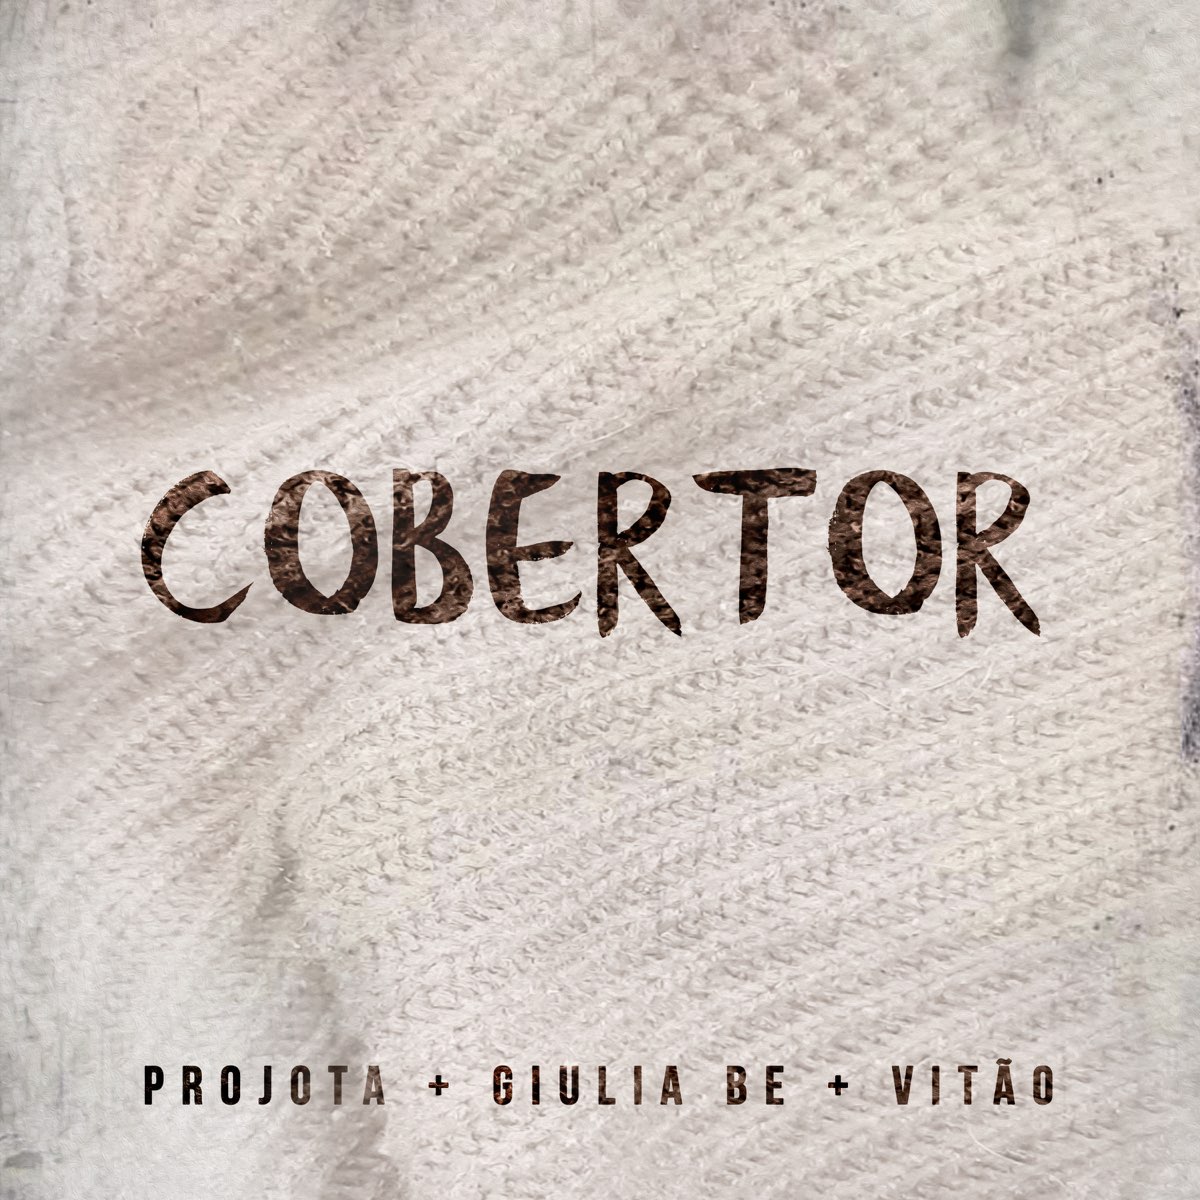 Cobertor (Remix) - Single - Album by Projota, Vitão & GIULIA BE - Apple  Music